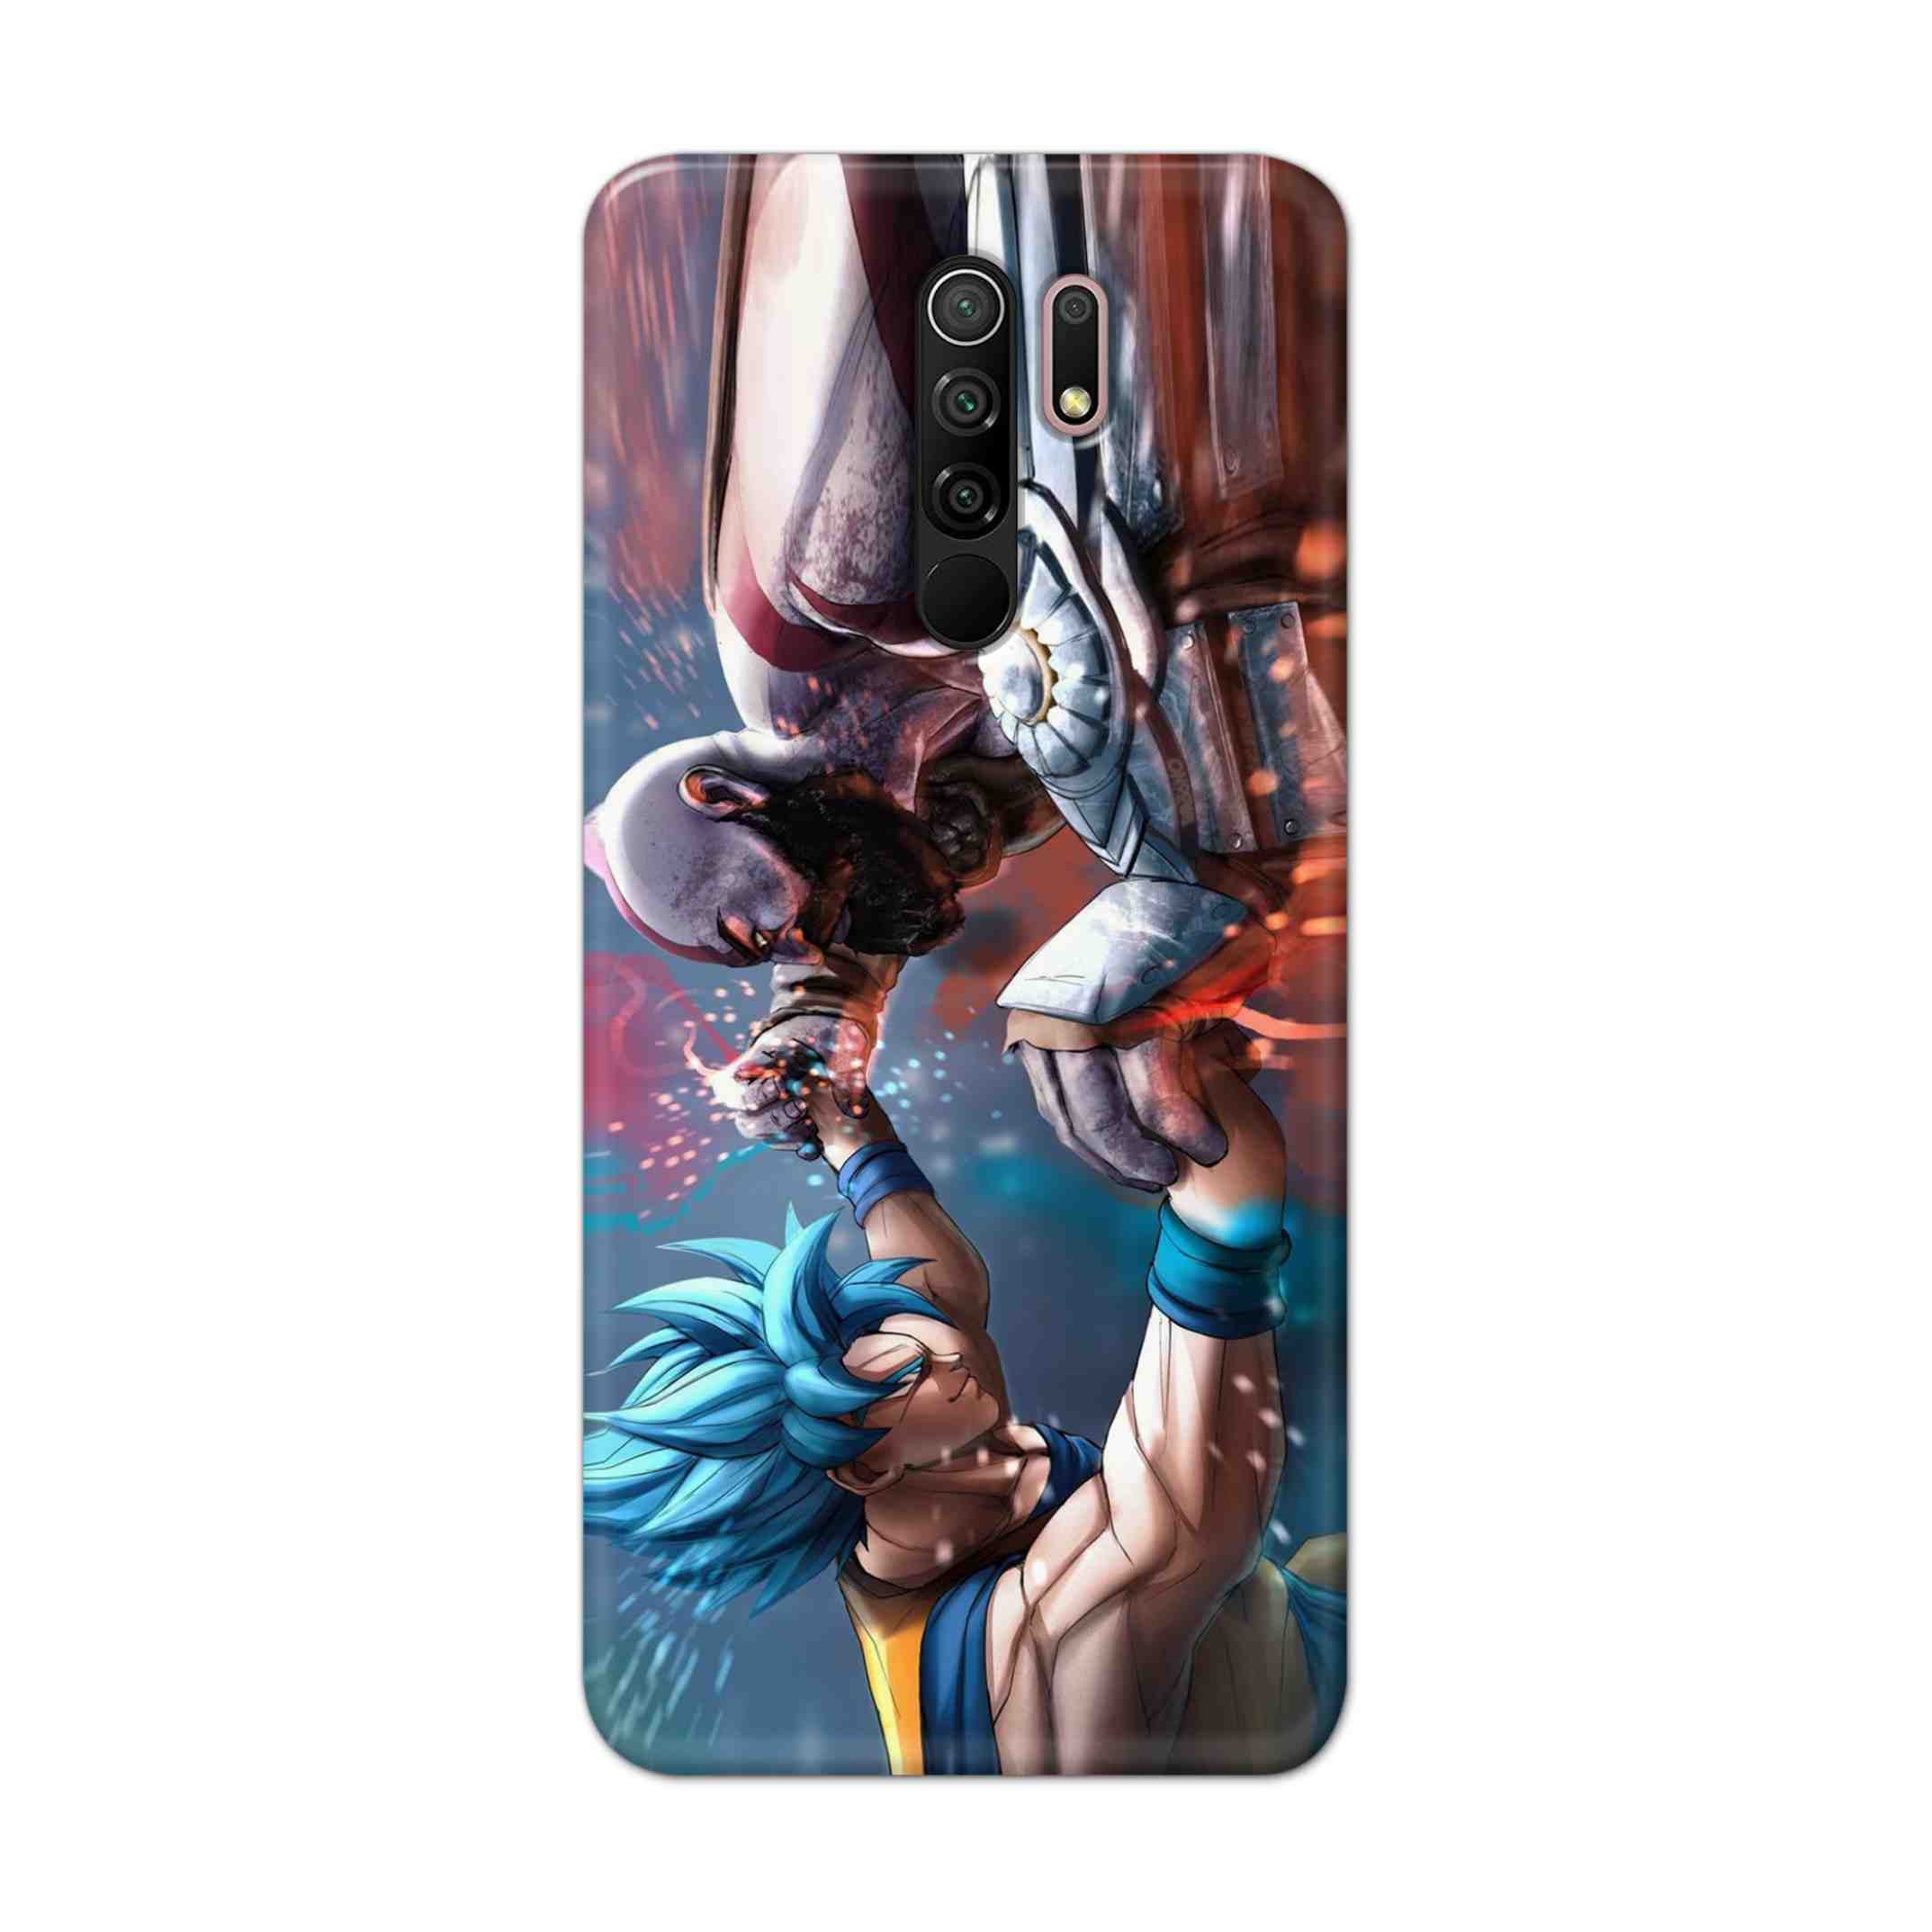 Buy Goku Vs Kratos Hard Back Mobile Phone Case Cover For Xiaomi Redmi 9 Prime Online